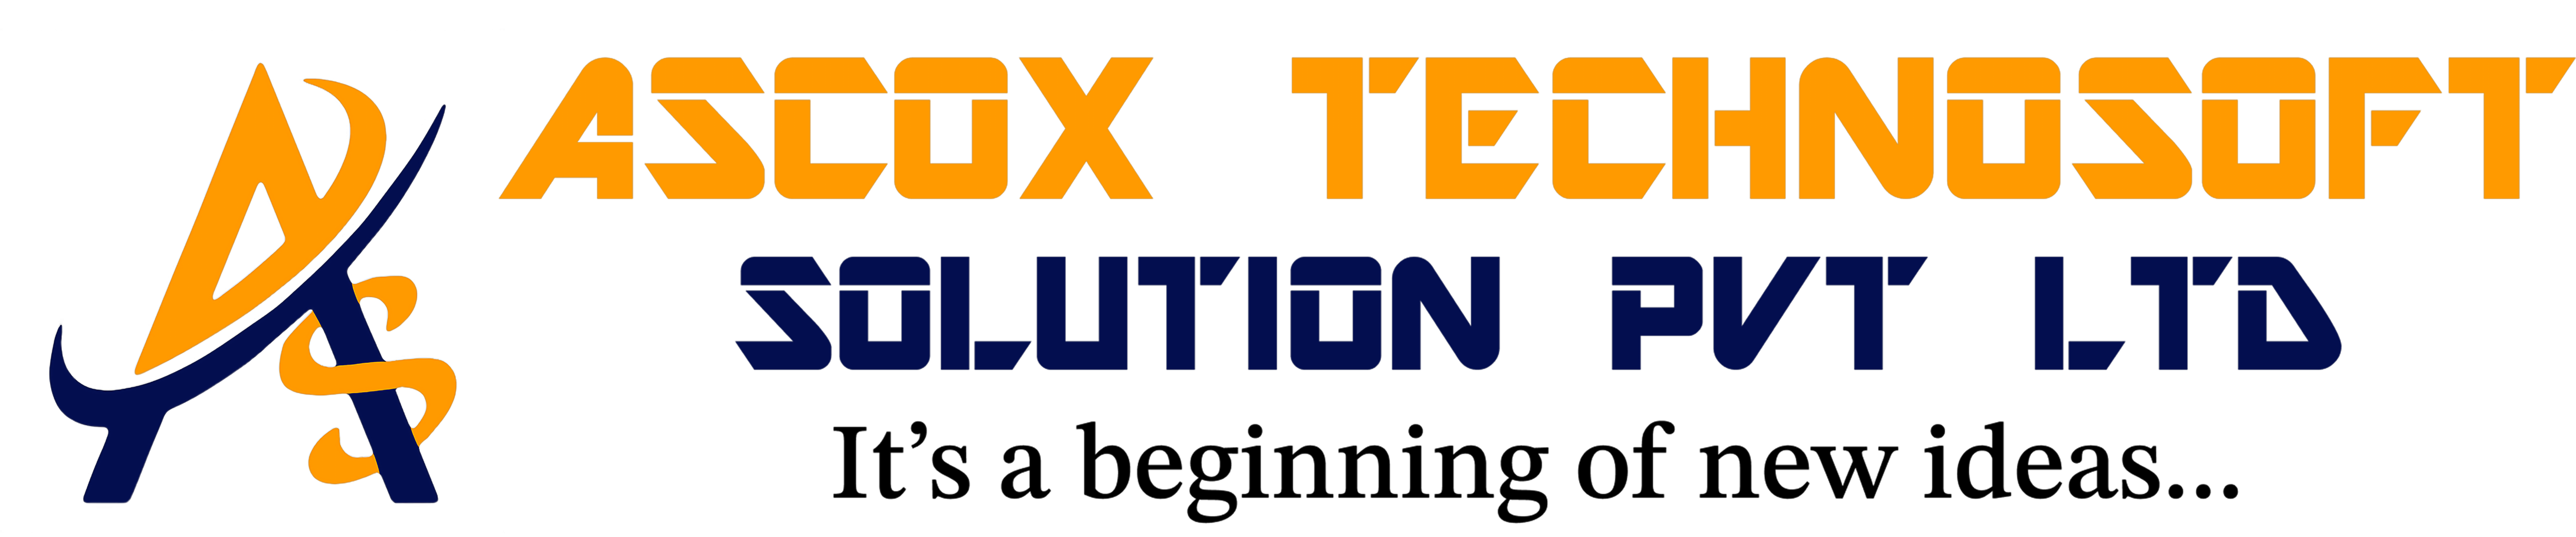 Ascox Technosoft Solution